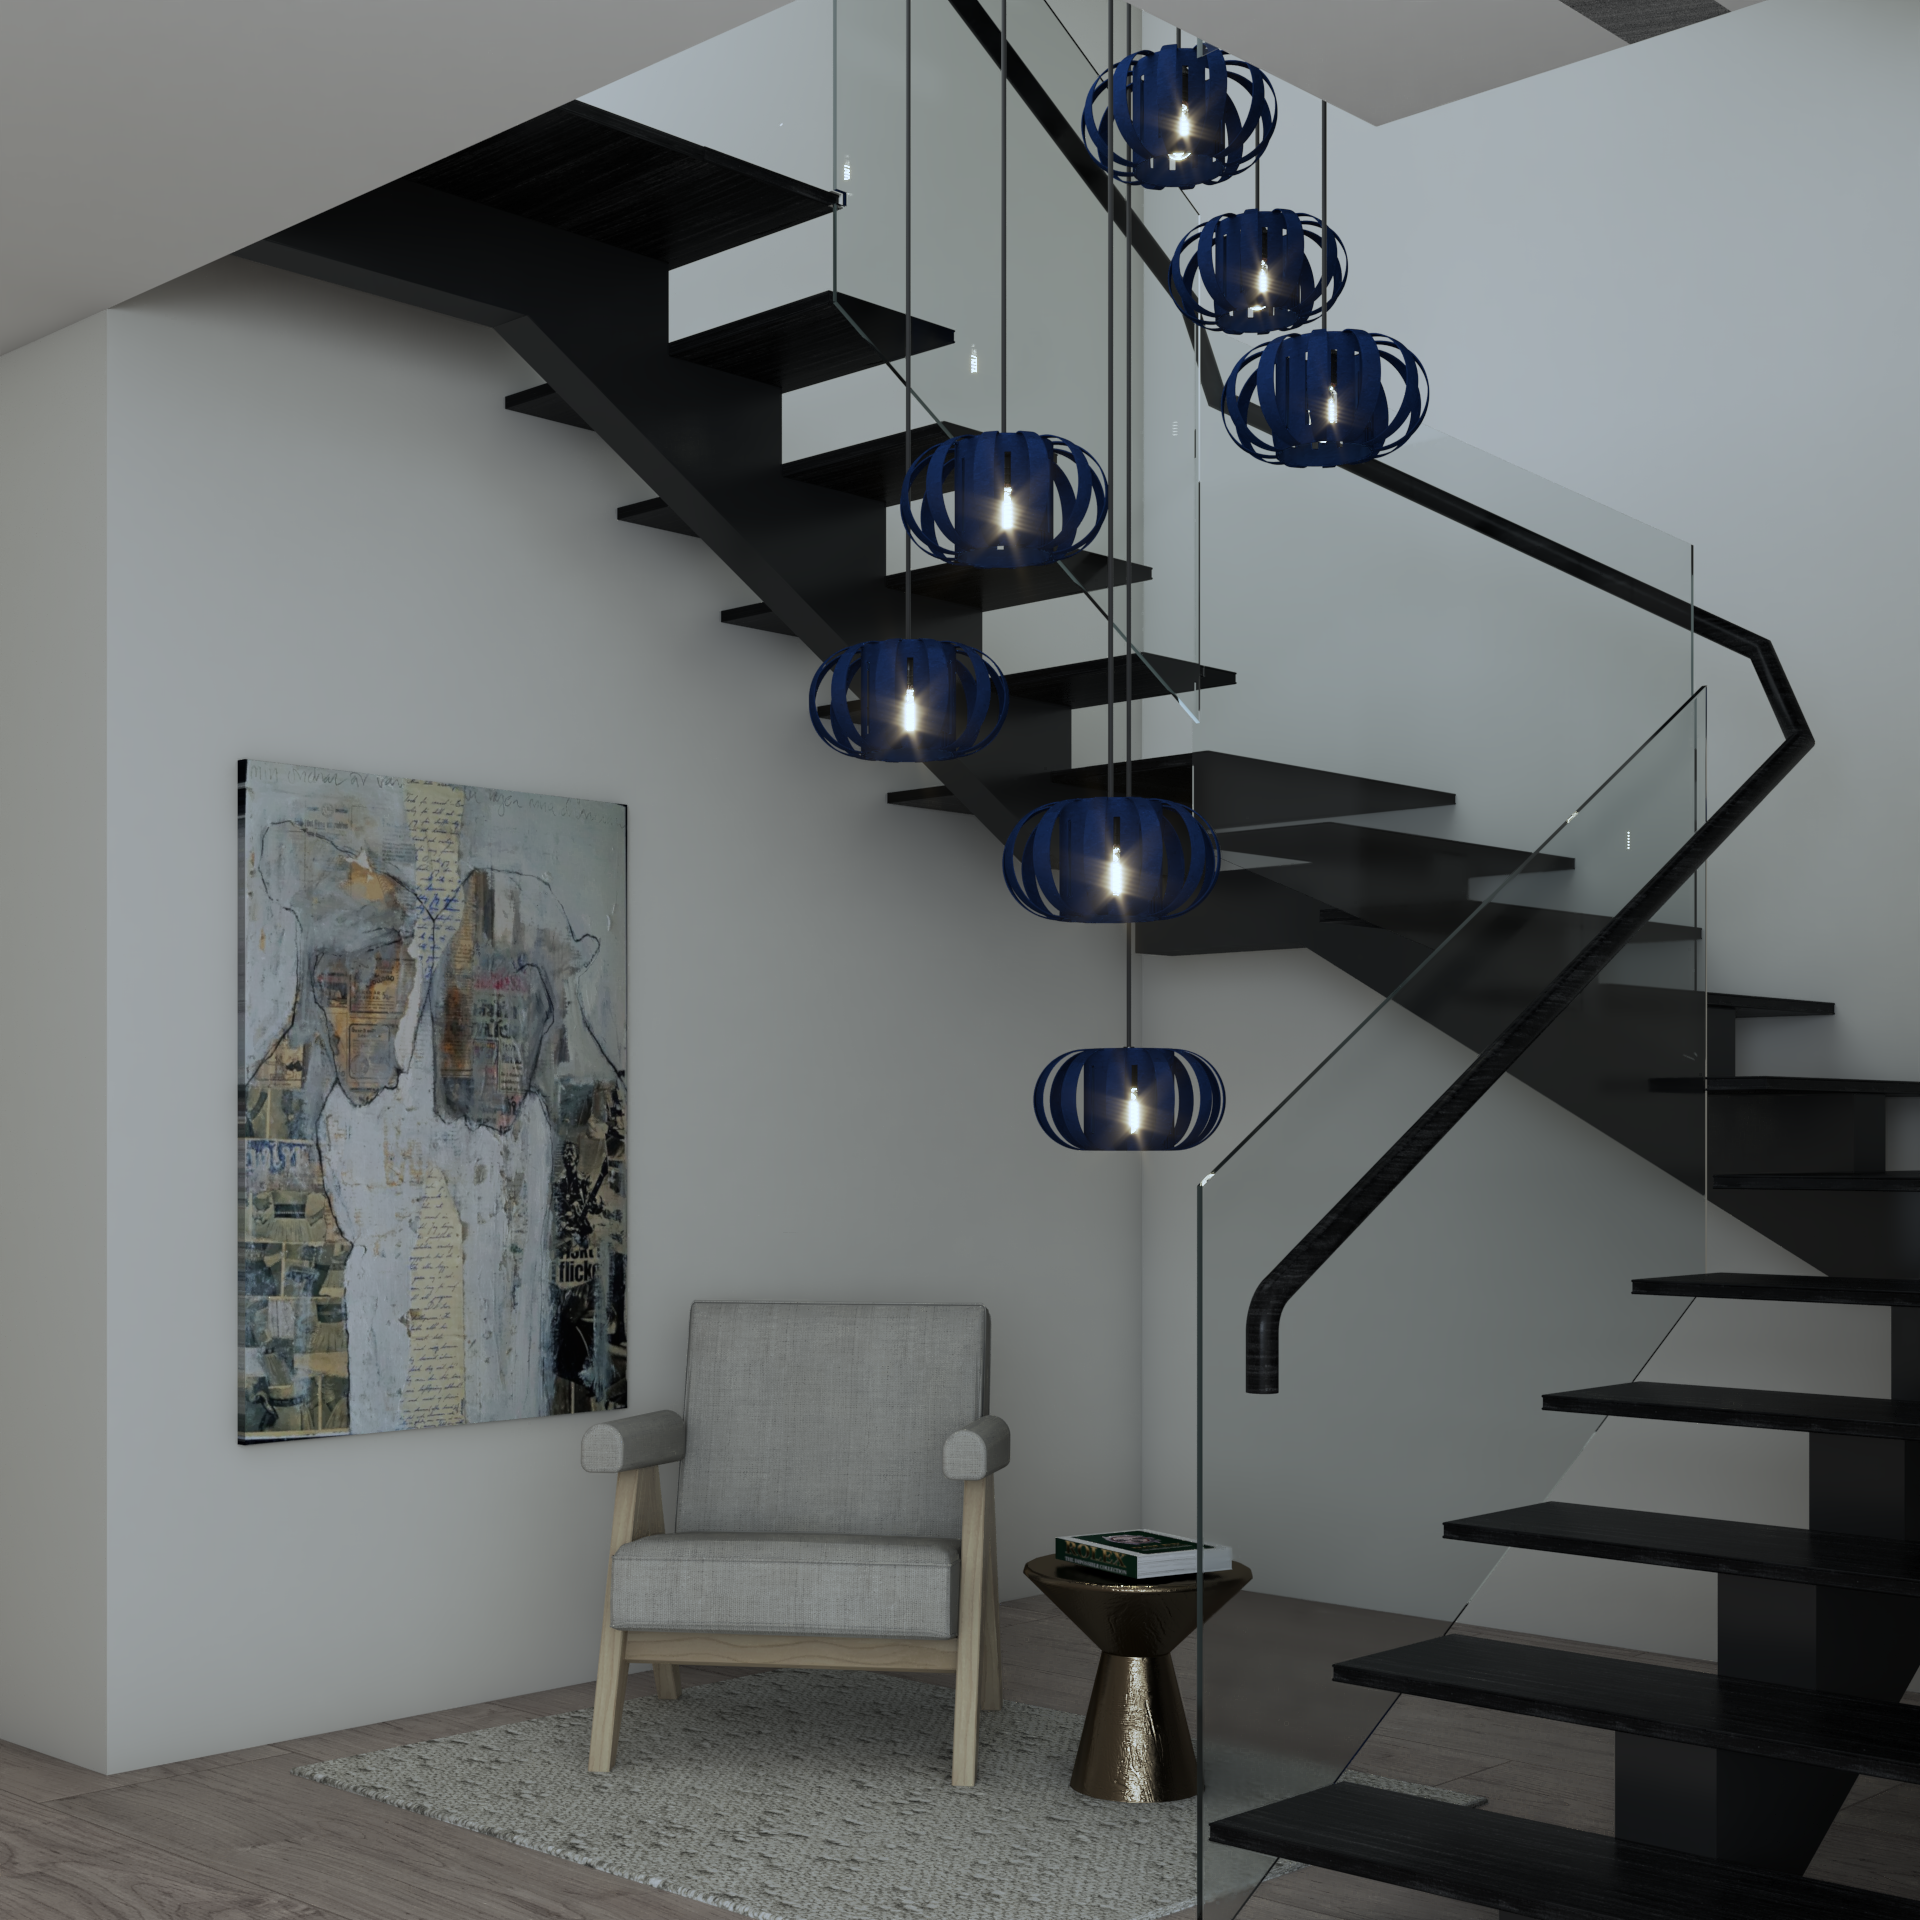 4075-STAIRS PENDANT LAMP BLUE FABRIC & BLACK STAIRS (SCENE 01)